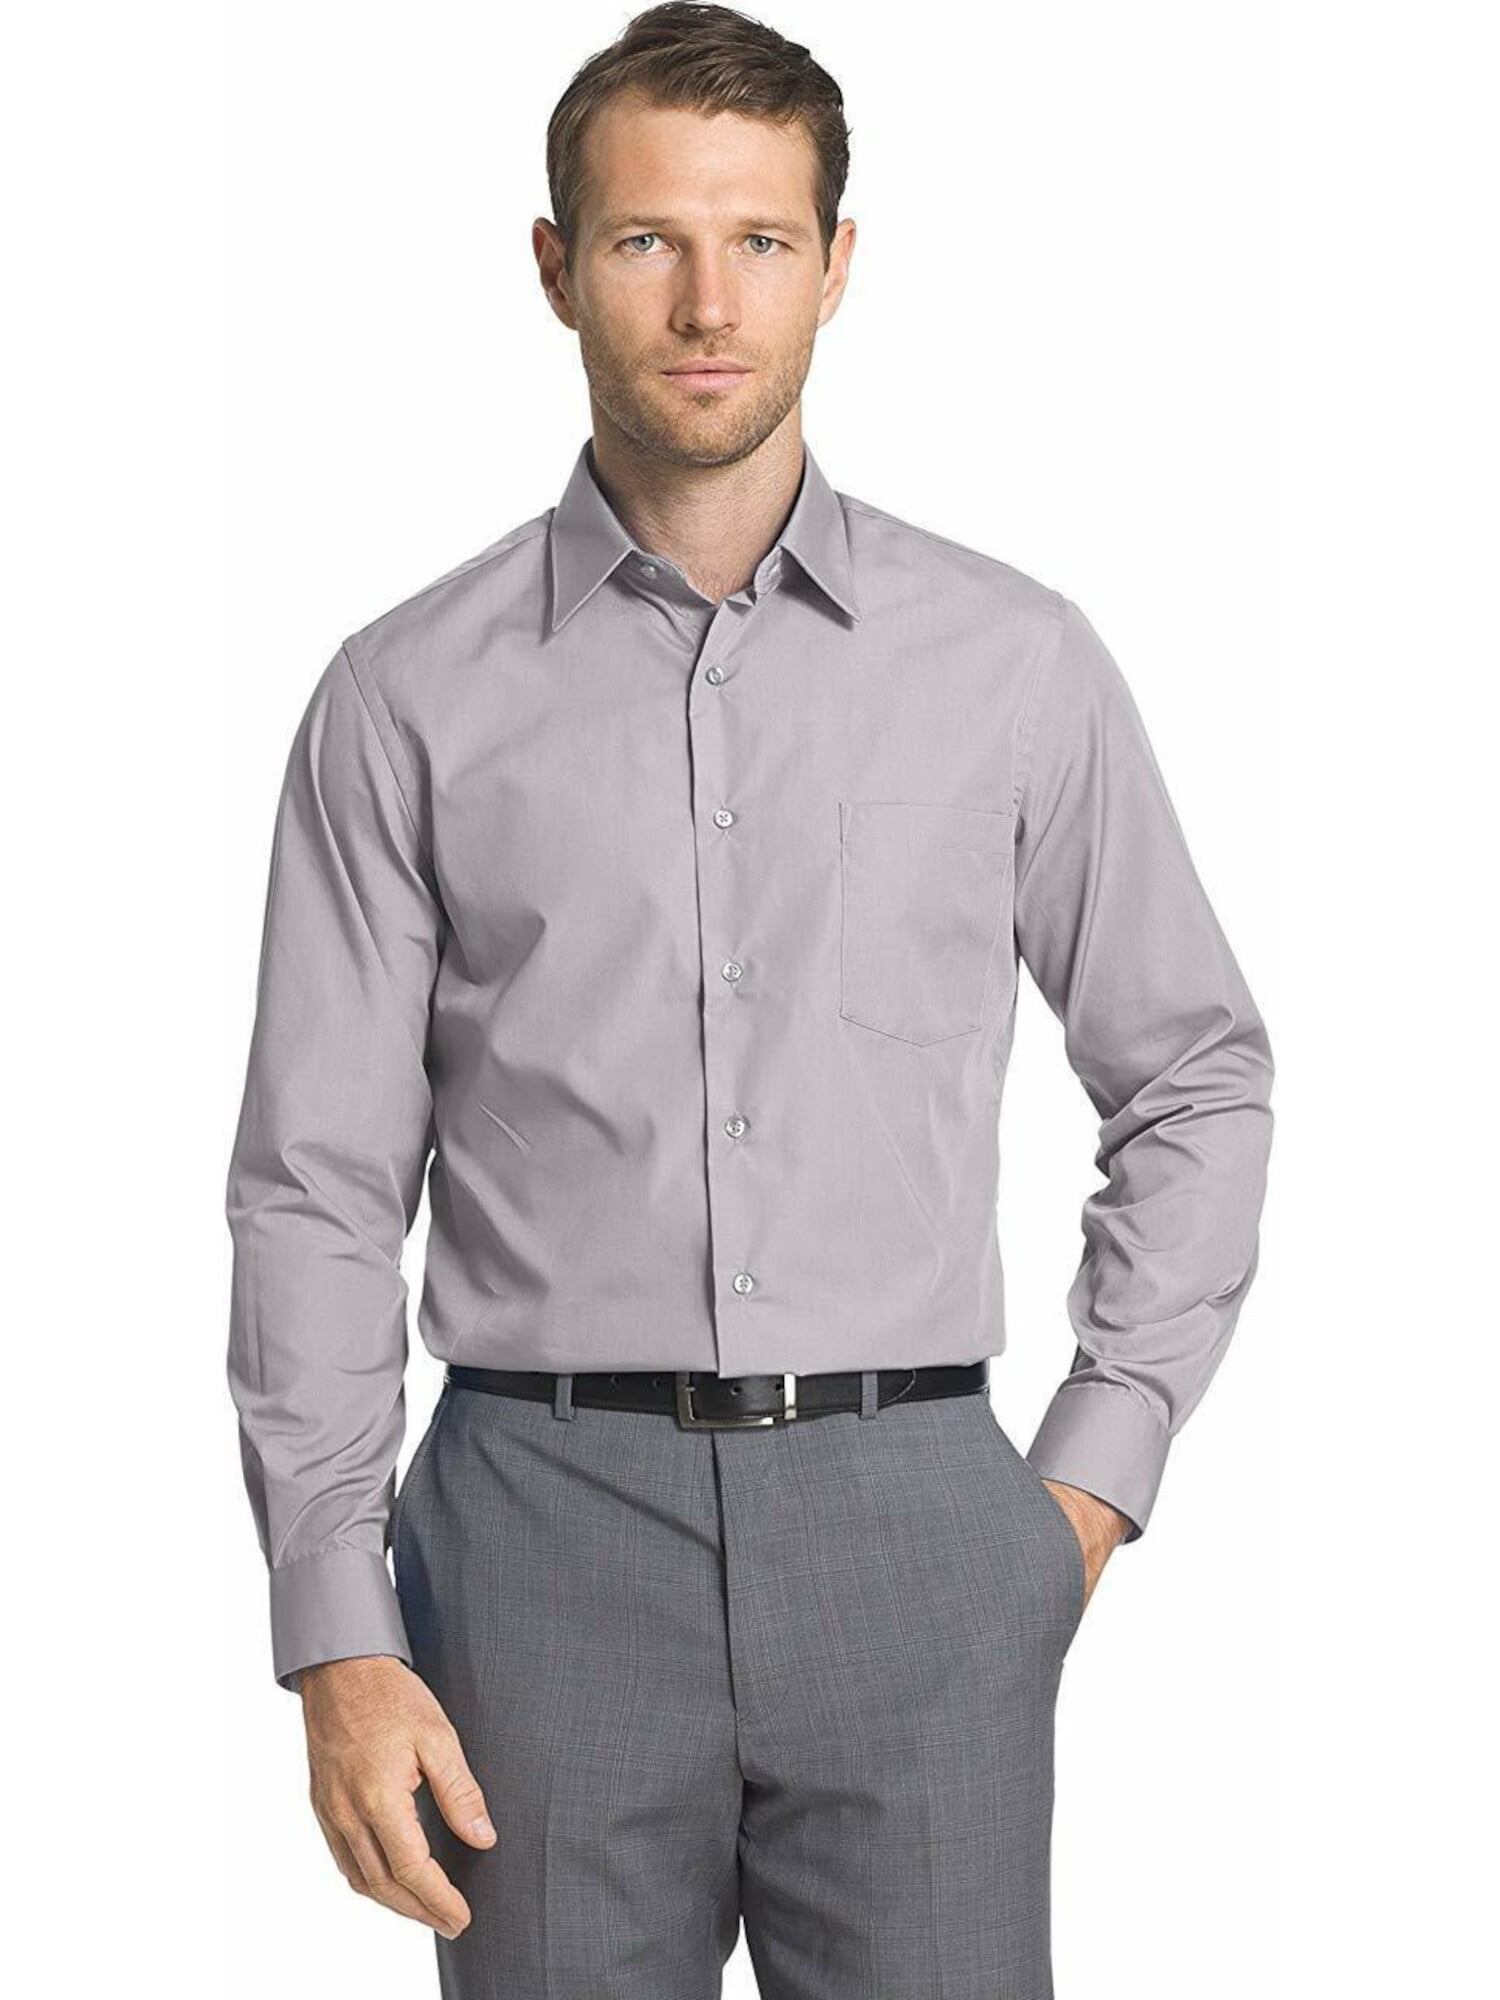 VAN HEUSEN Mens Gray Collared Dress Shirt L 16.5- 32/33 